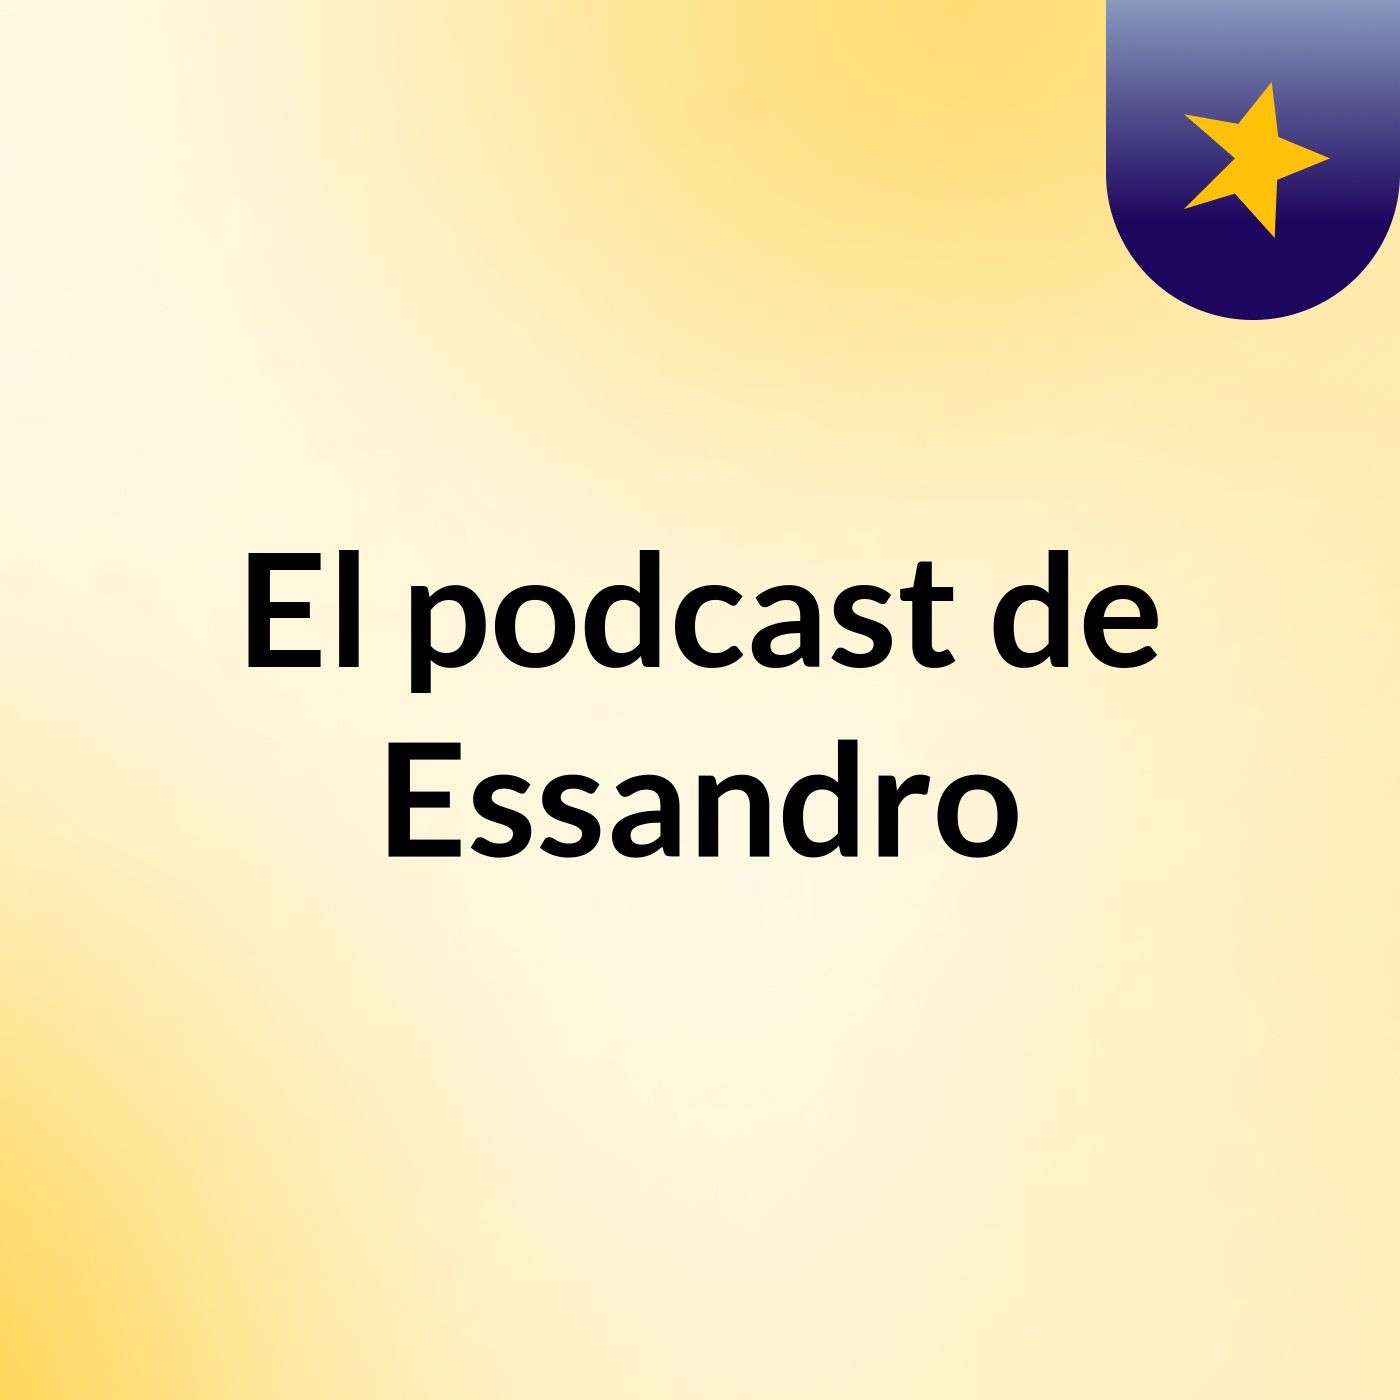 Episodio 7 - El podcast de Essandro